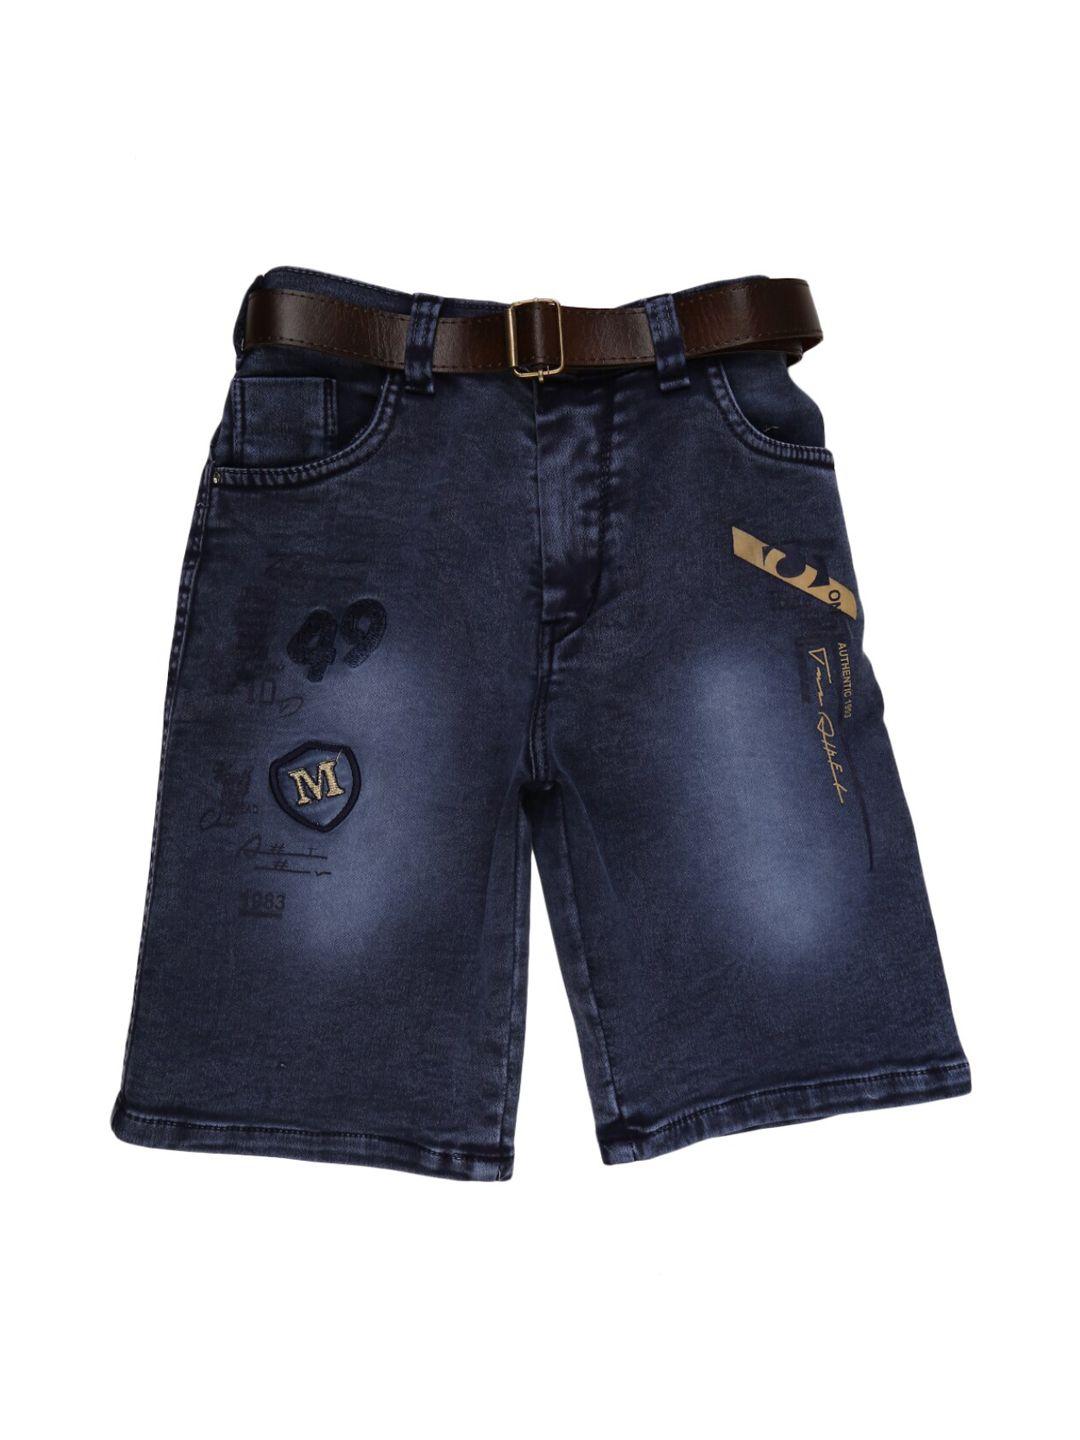 v-mart boys navy blue washed denim outdoor denim shorts